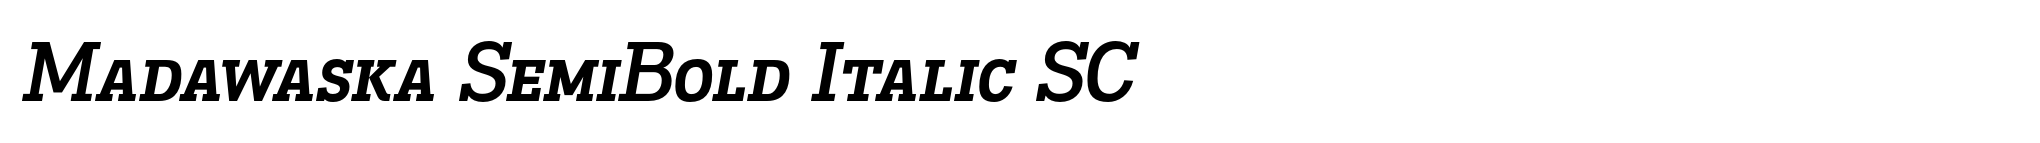 Madawaska SemiBold Italic SC image